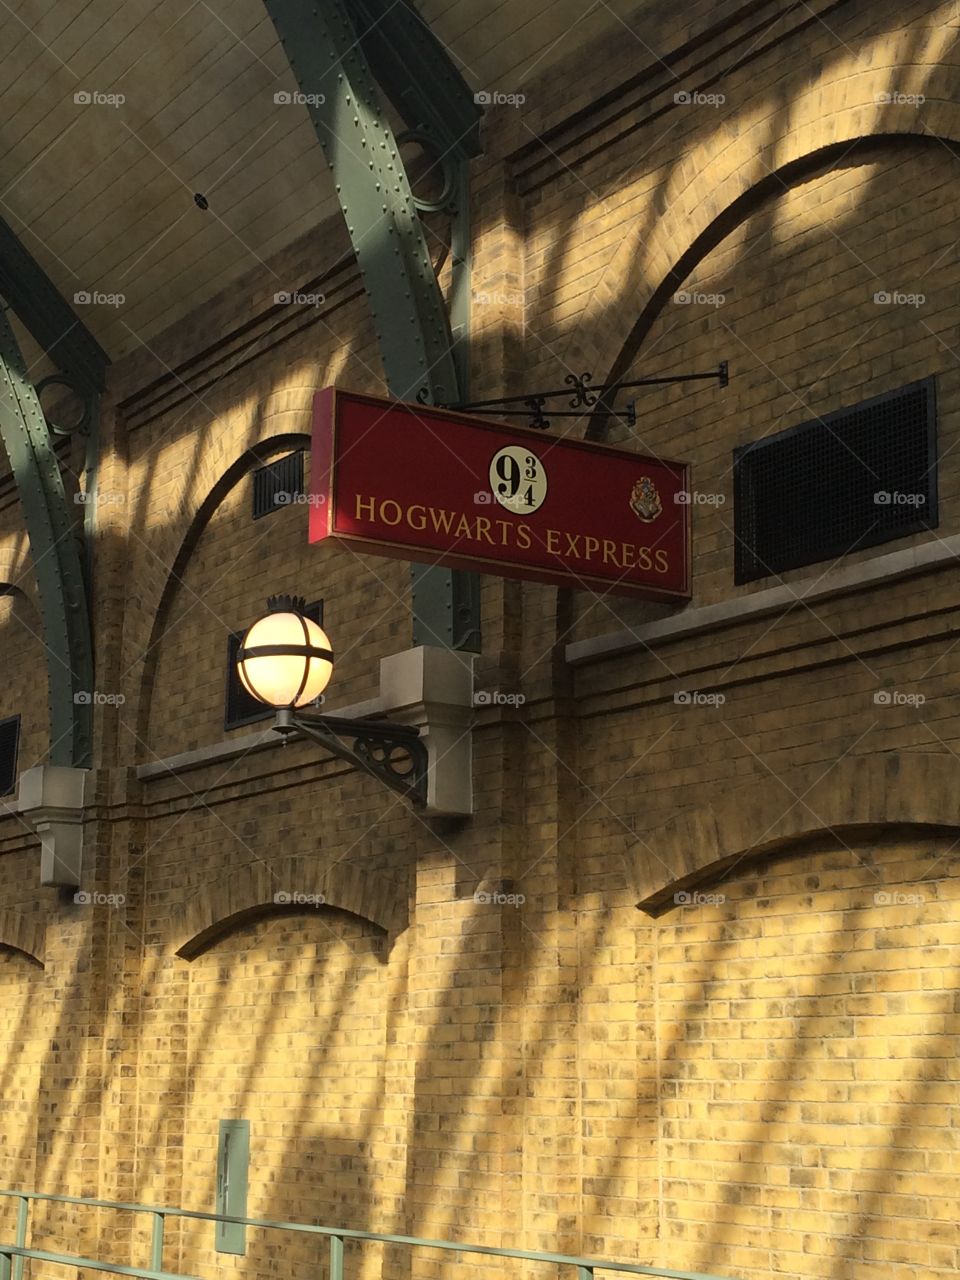 Hogwarts train station . Hogwarts Station, Universal Studios Orlando